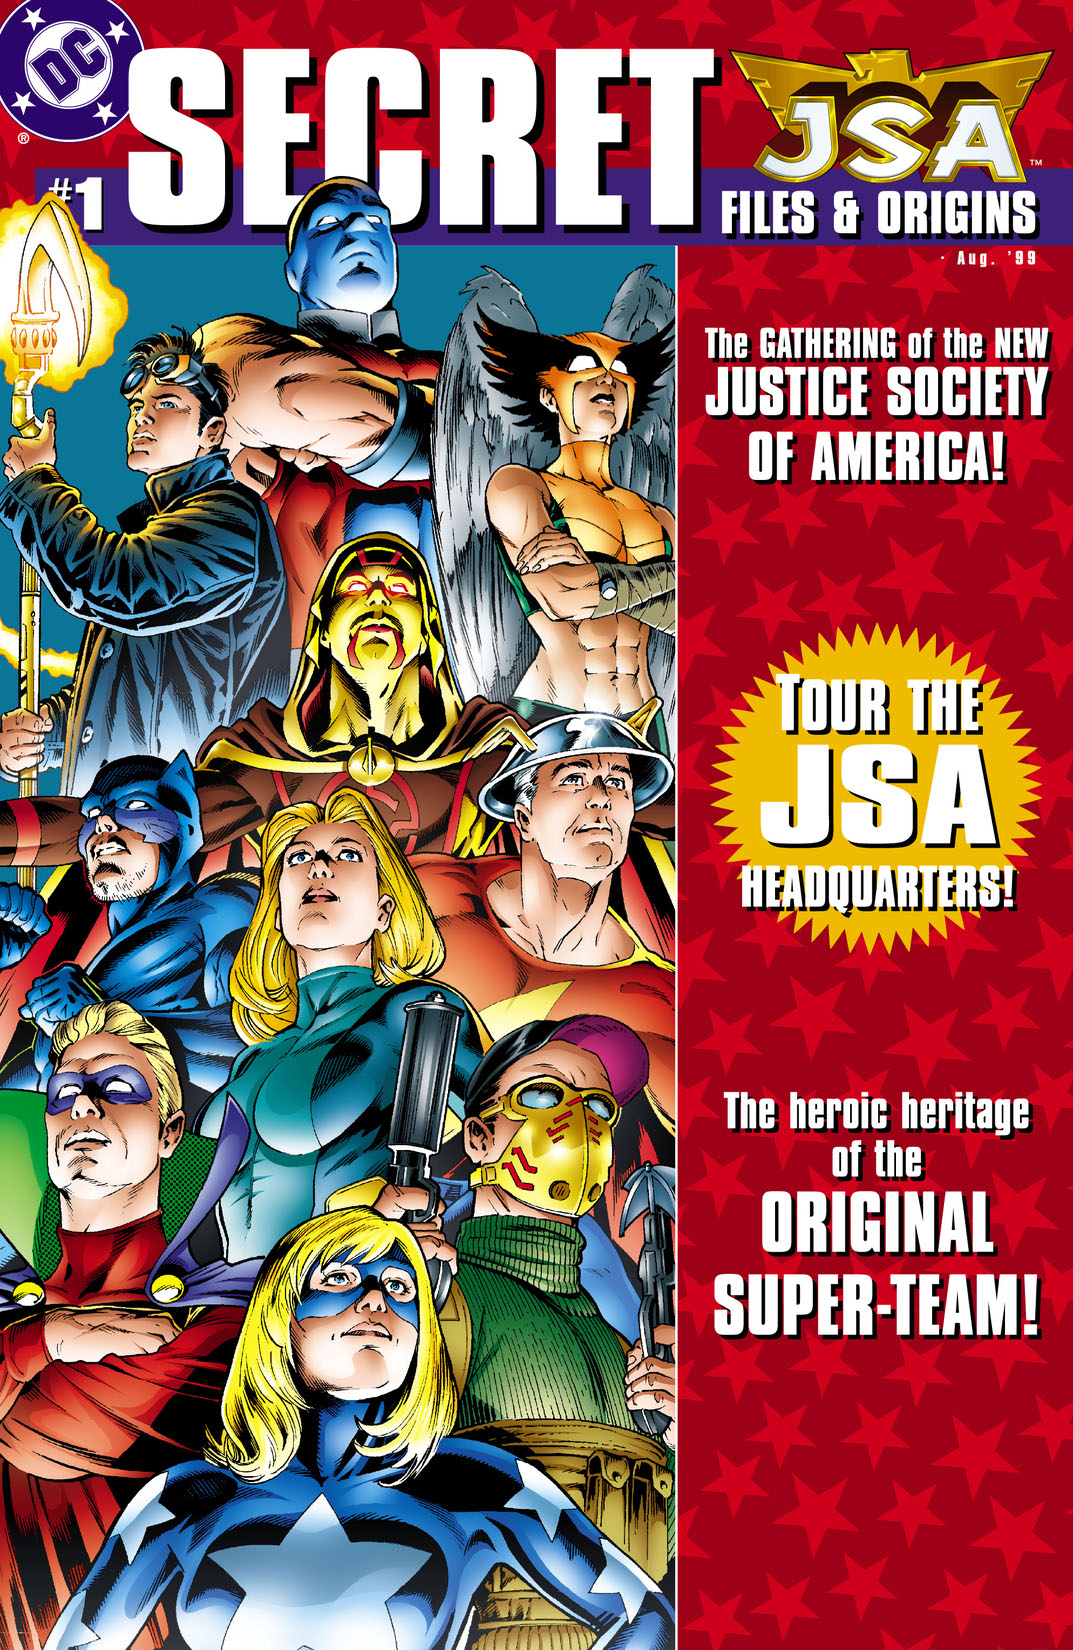 JSA Secret Files #1 preview images